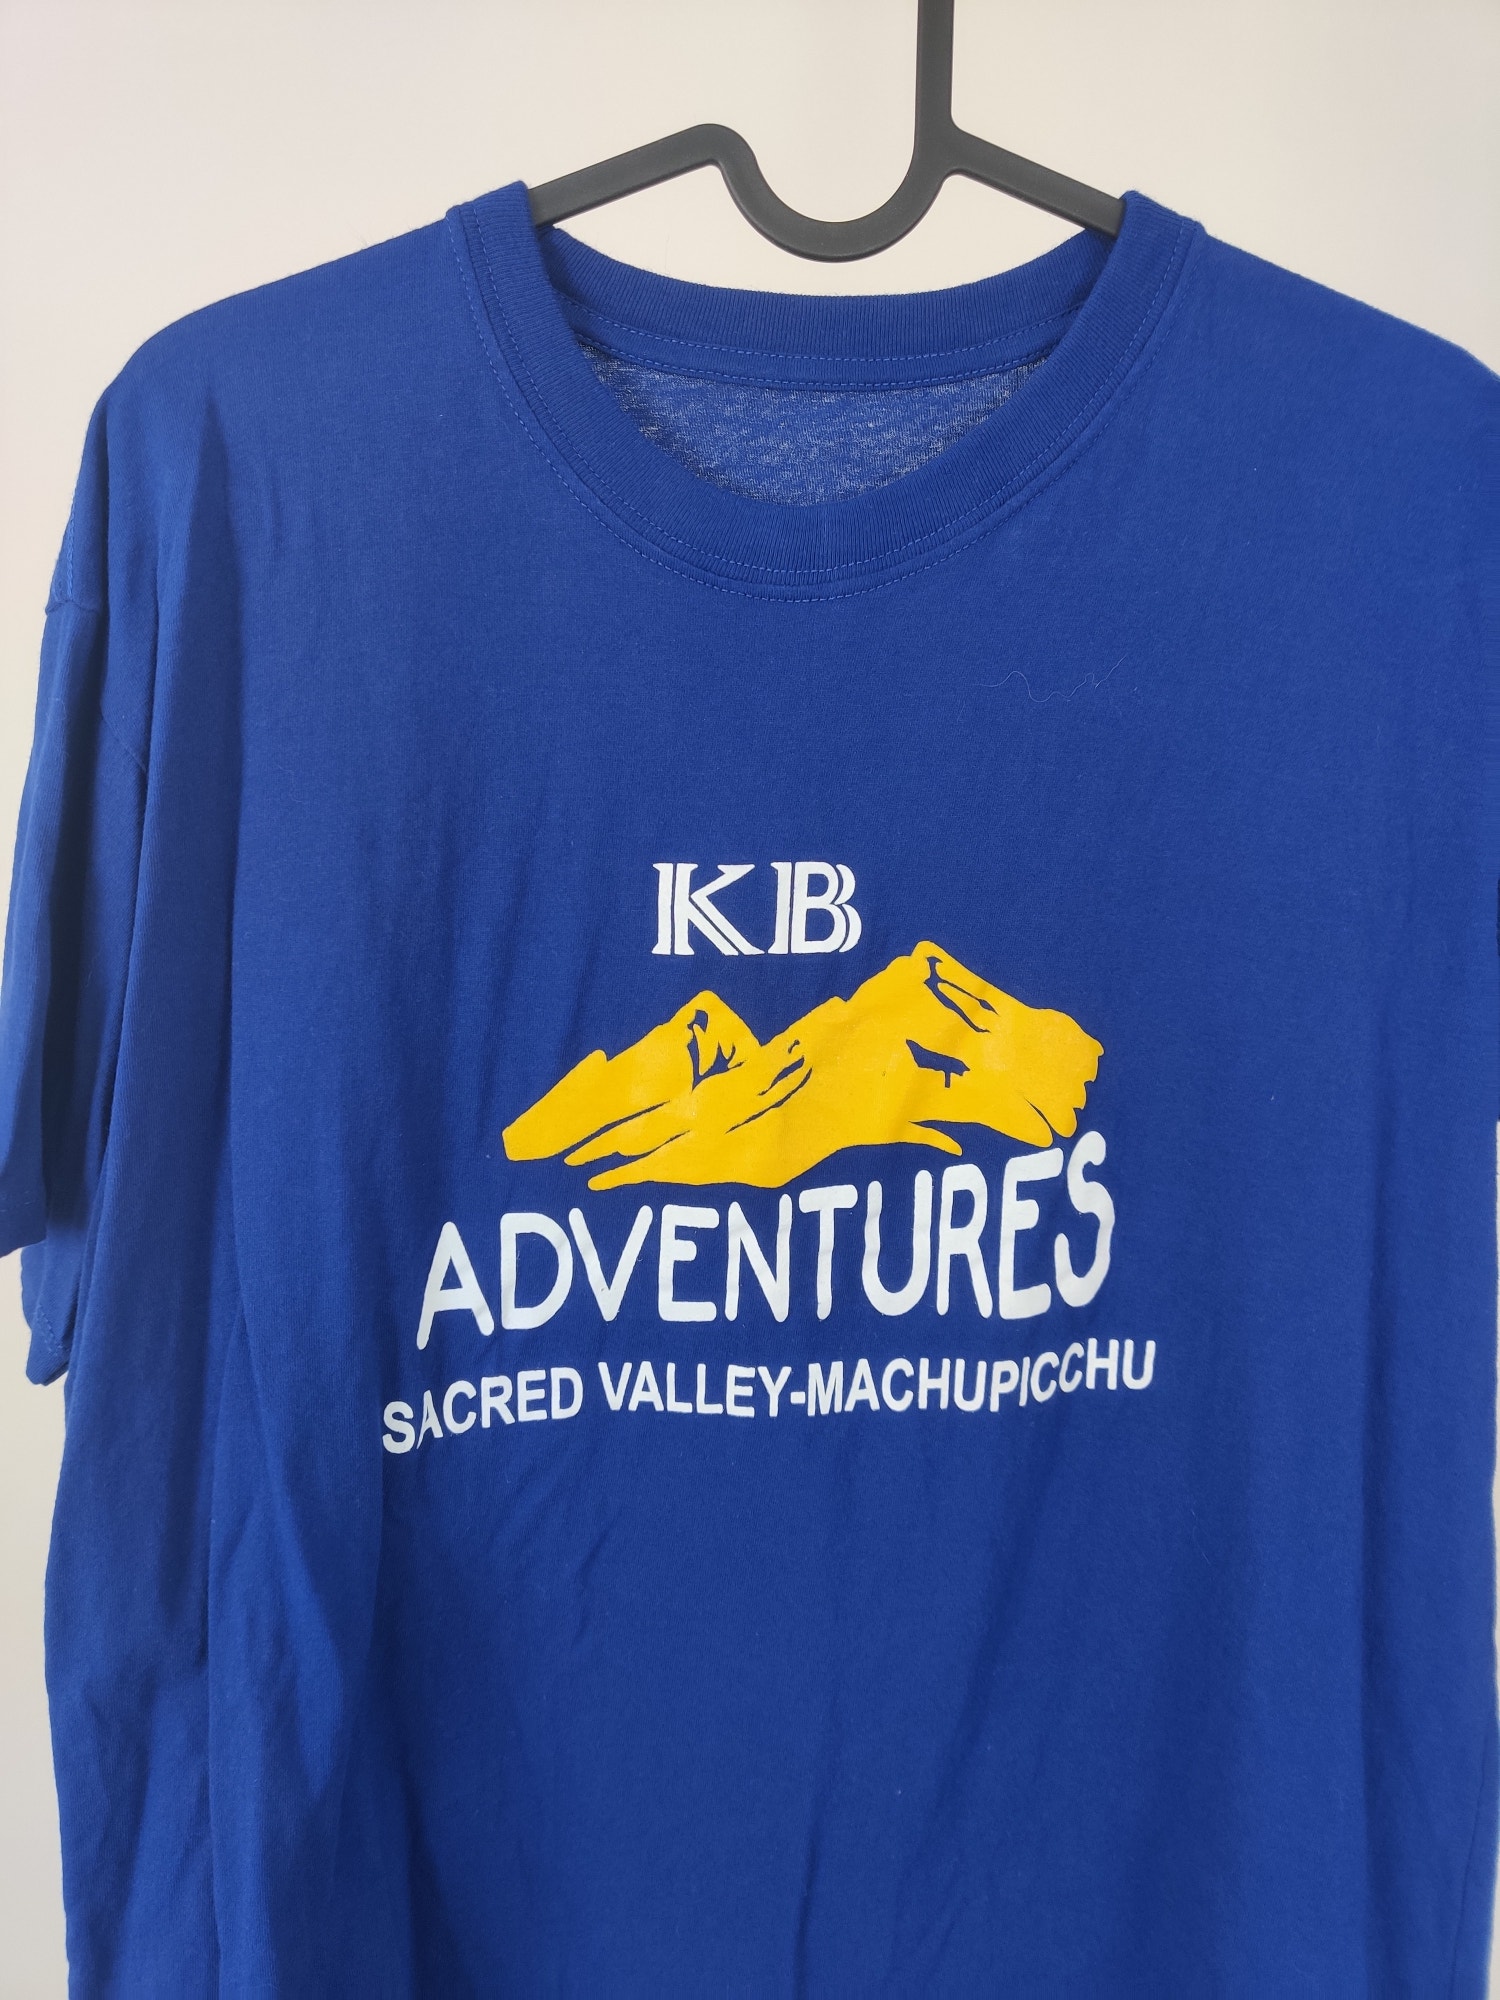 (V) VTG RARE KB Adventures Sacred Valley-Machupicchu Peru Men shirt SS sz S - Picture 4 of 7